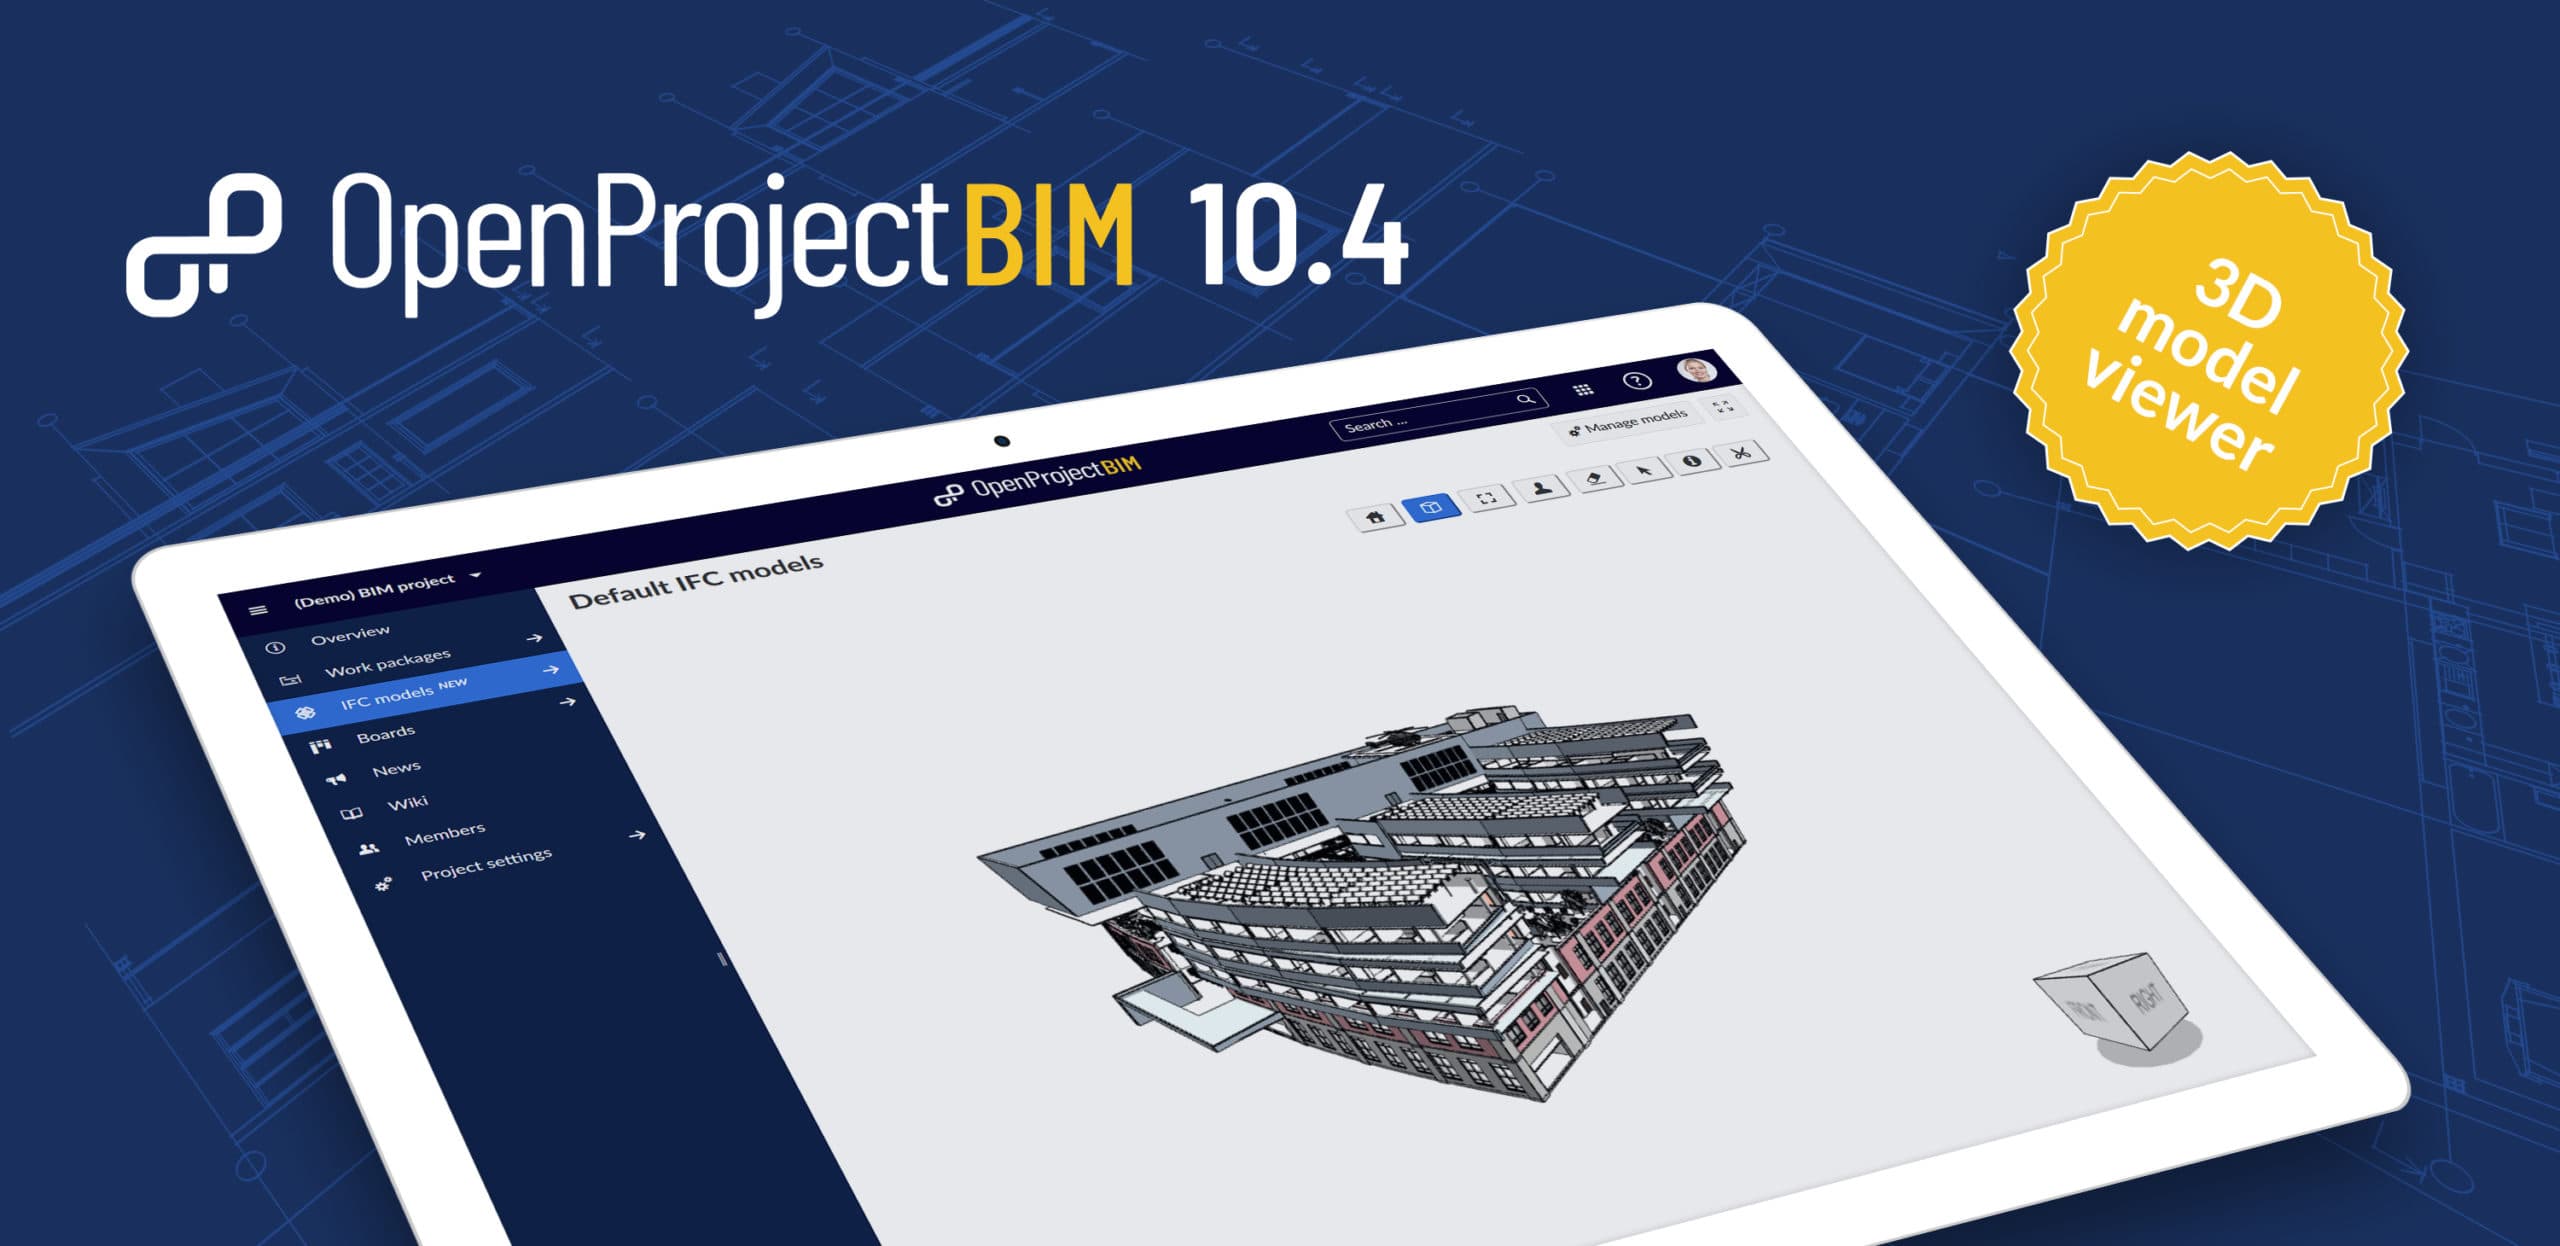 OpenProject BIM 10.4: digital construction project management with 3D building model viewer (IFC)